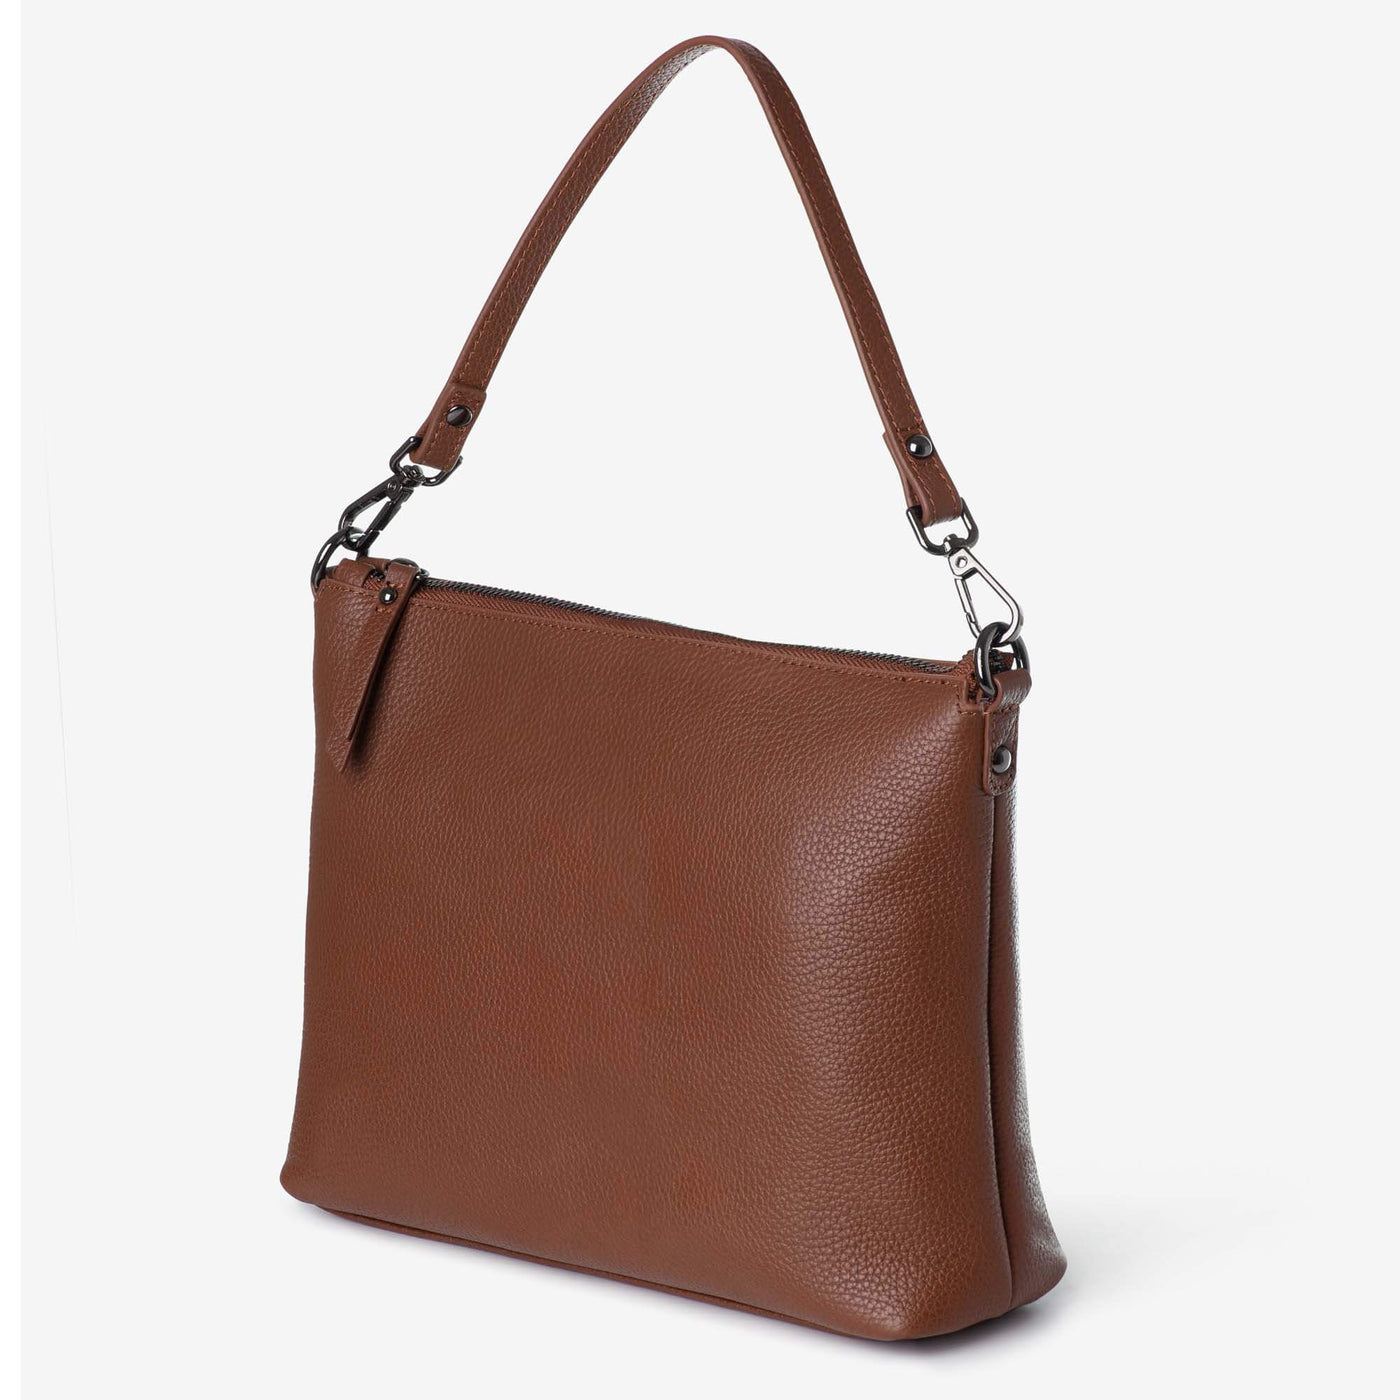 Everyday Leather Crossbody Bag - Tan